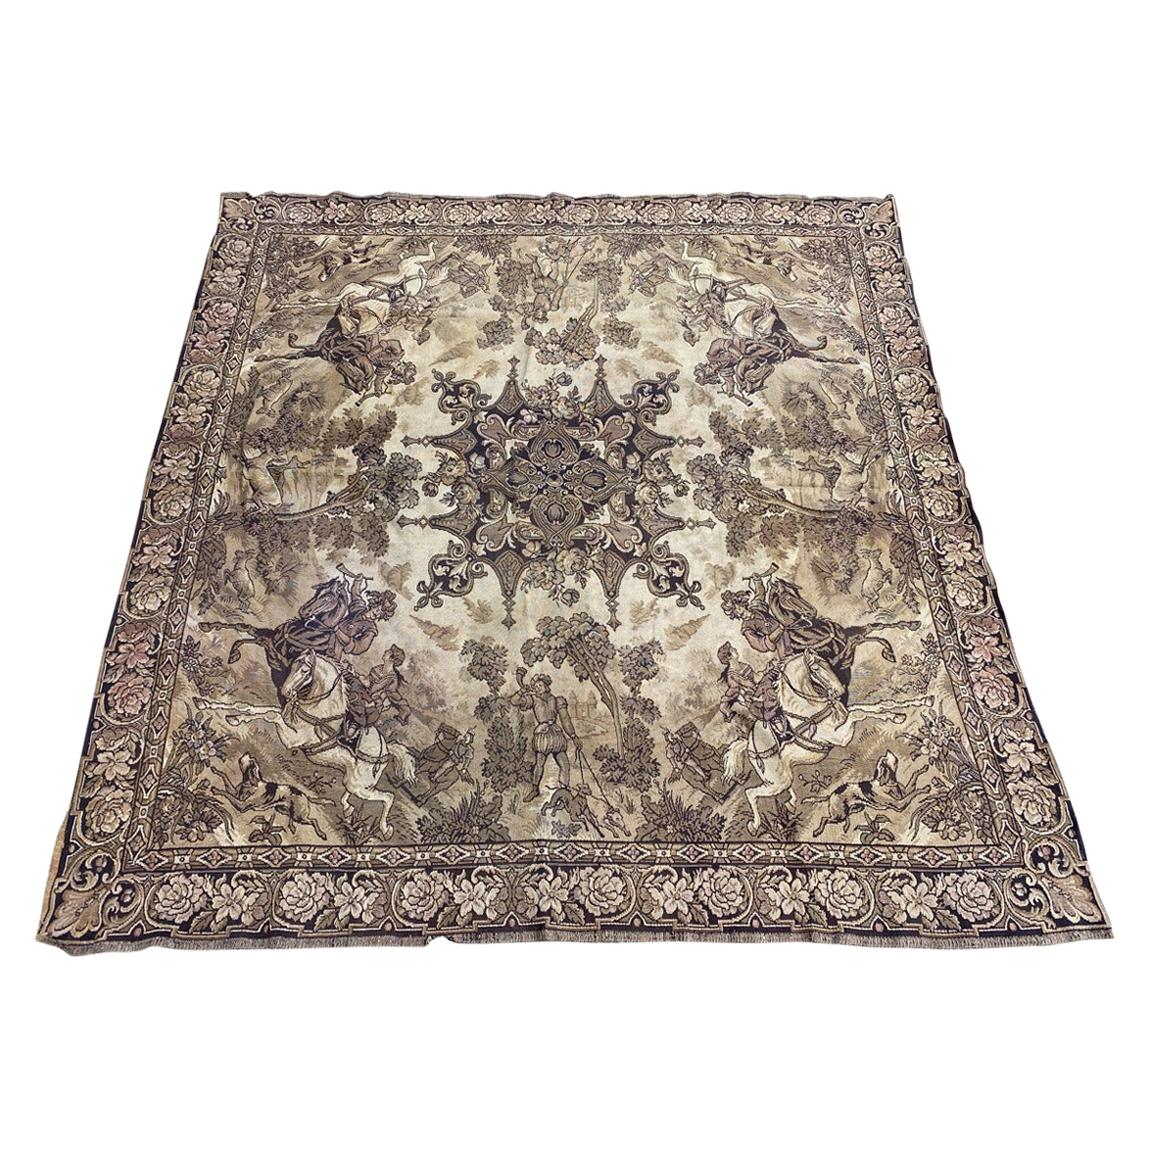 Antique Jaquar Tapestry Tablecloth